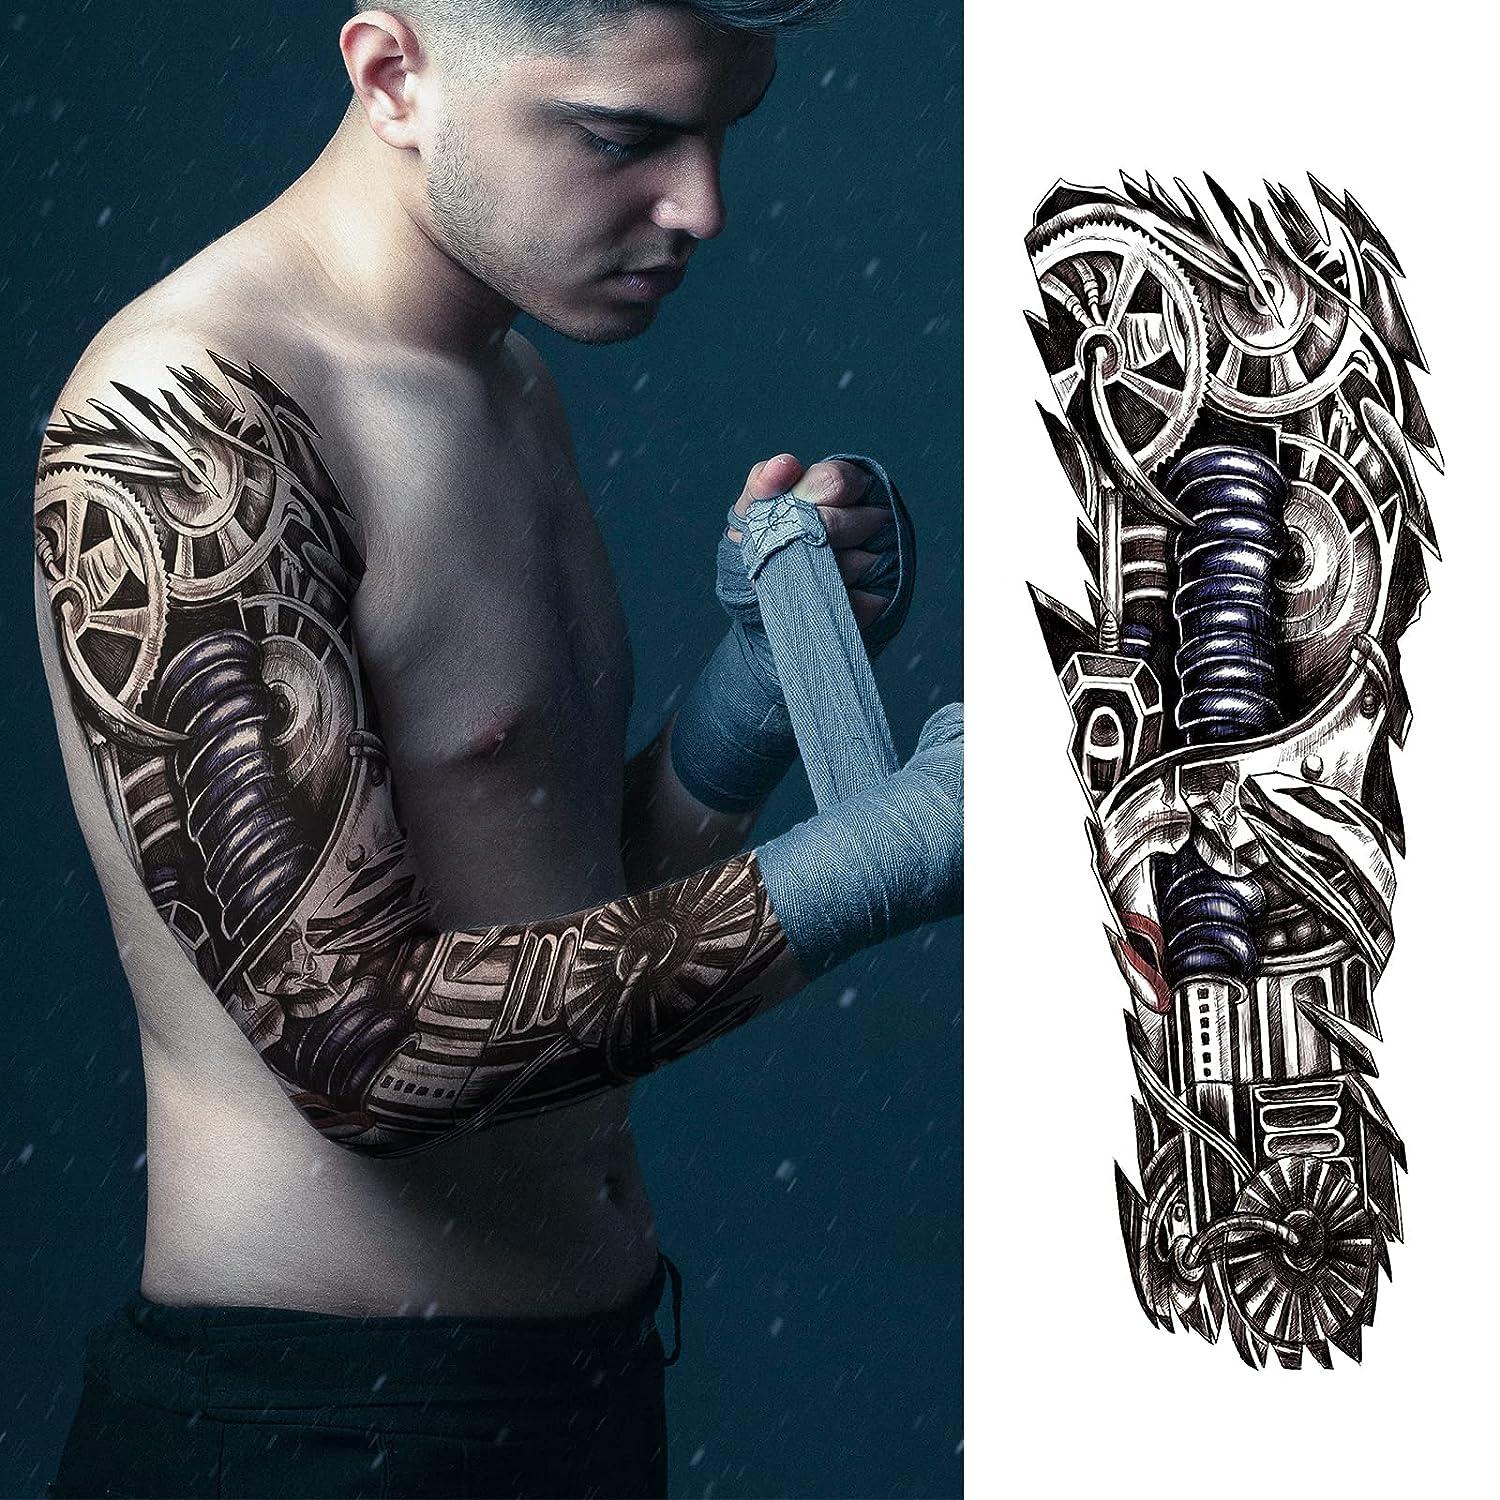 Robotic Biomechanical Tattoo On Full Sleeve - Tattoos Designs